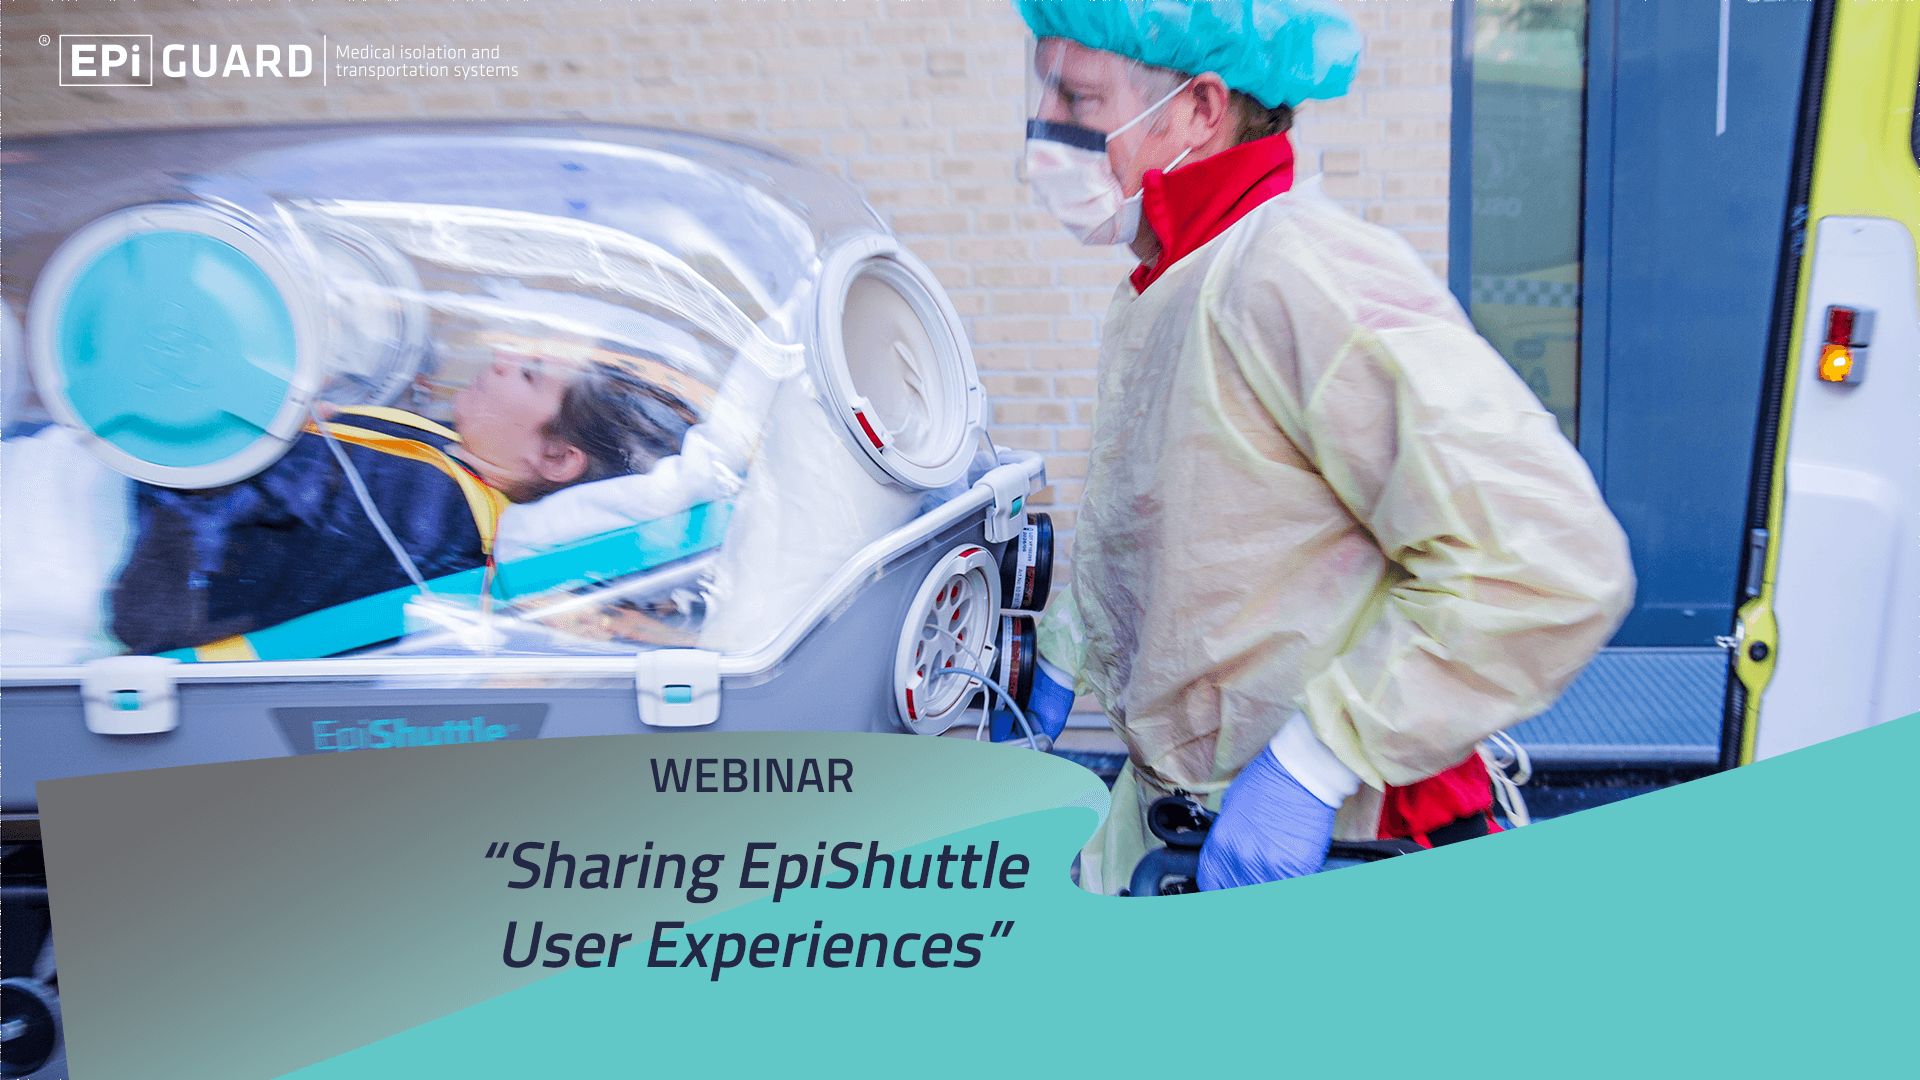 Product Webinar Recap: “Sharing EpiShuttle User Experiences” – EpiGuard image